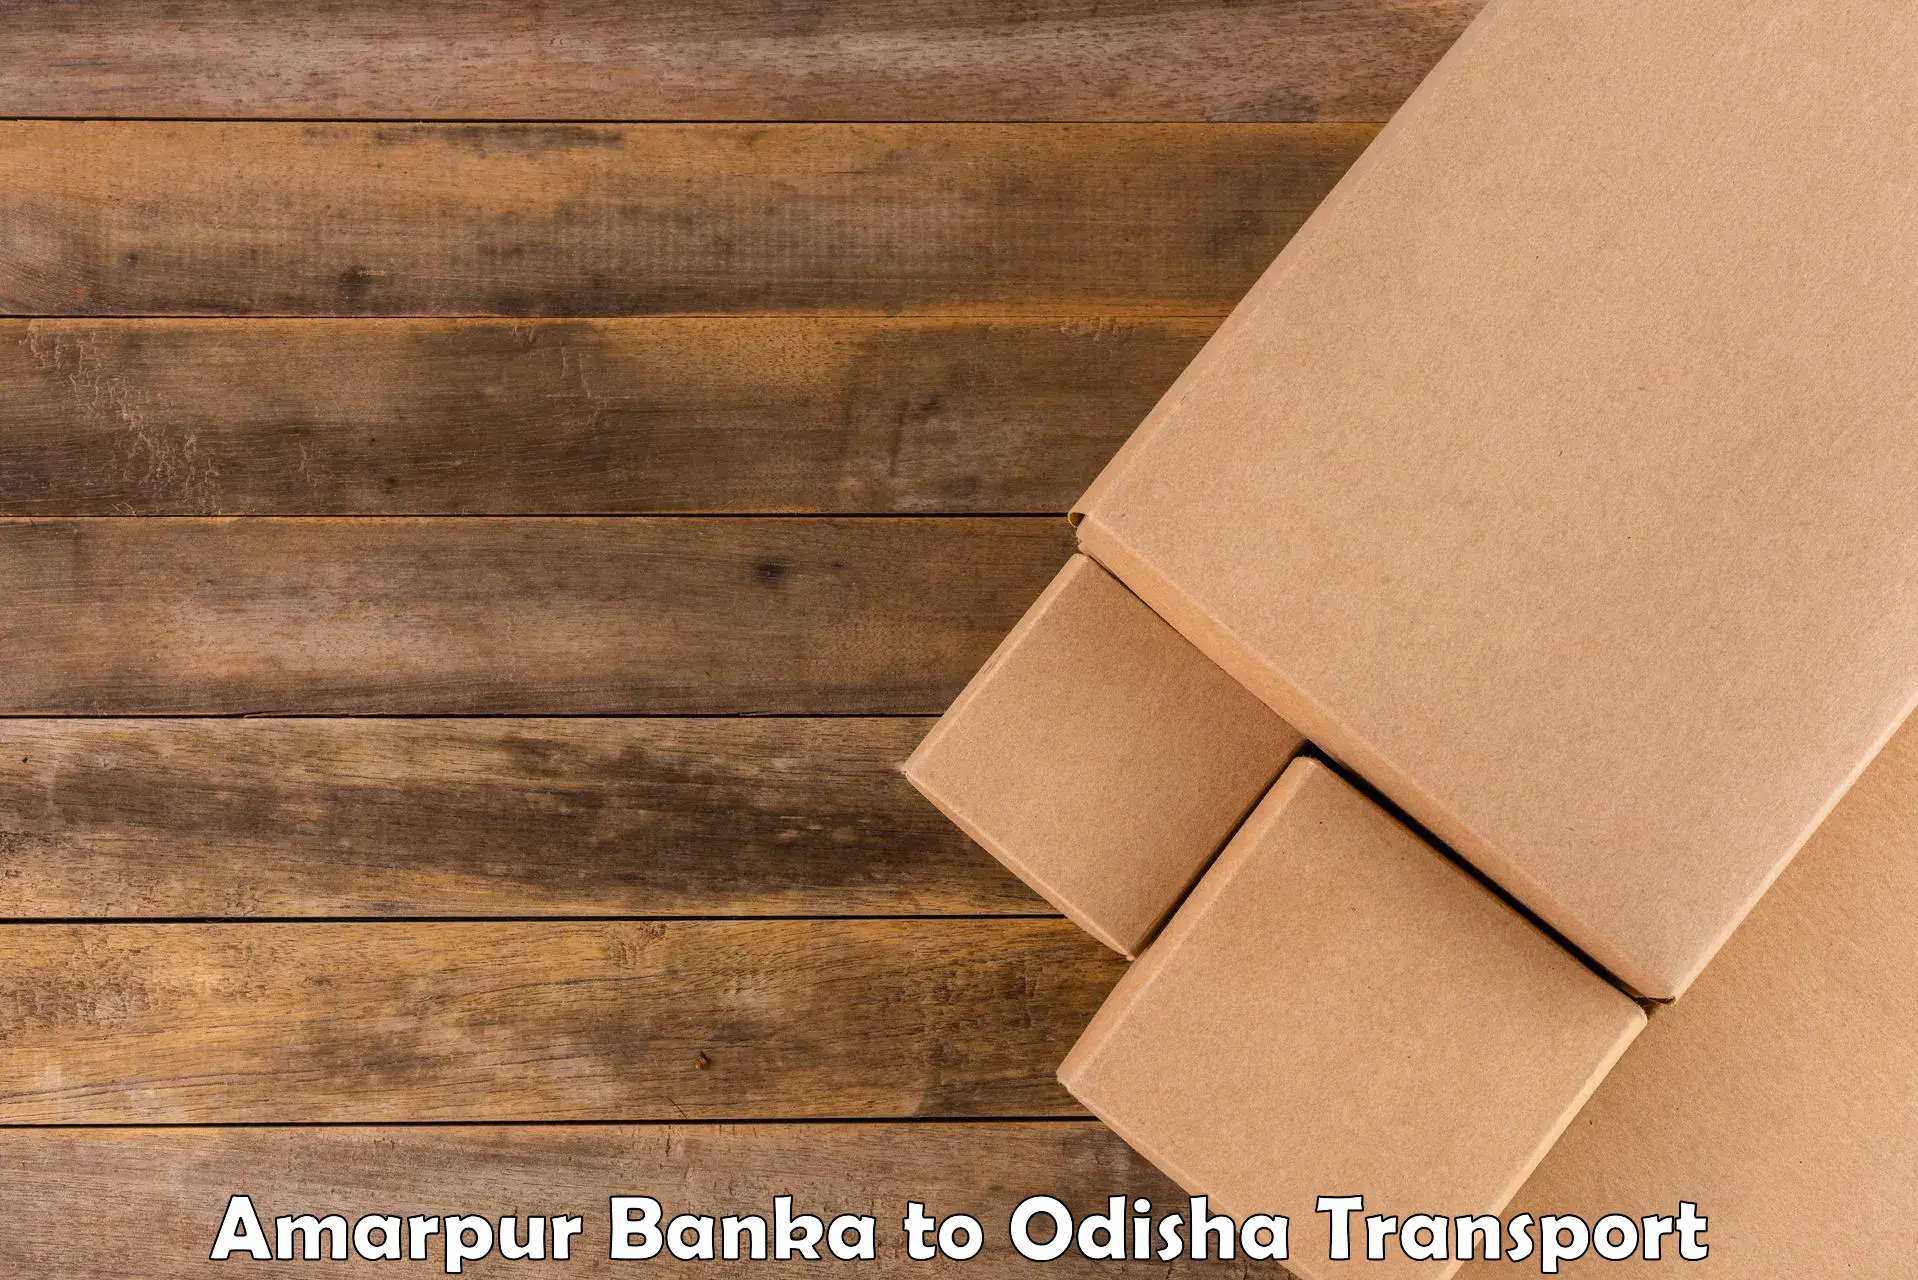 Container transport service Amarpur Banka to Mathili